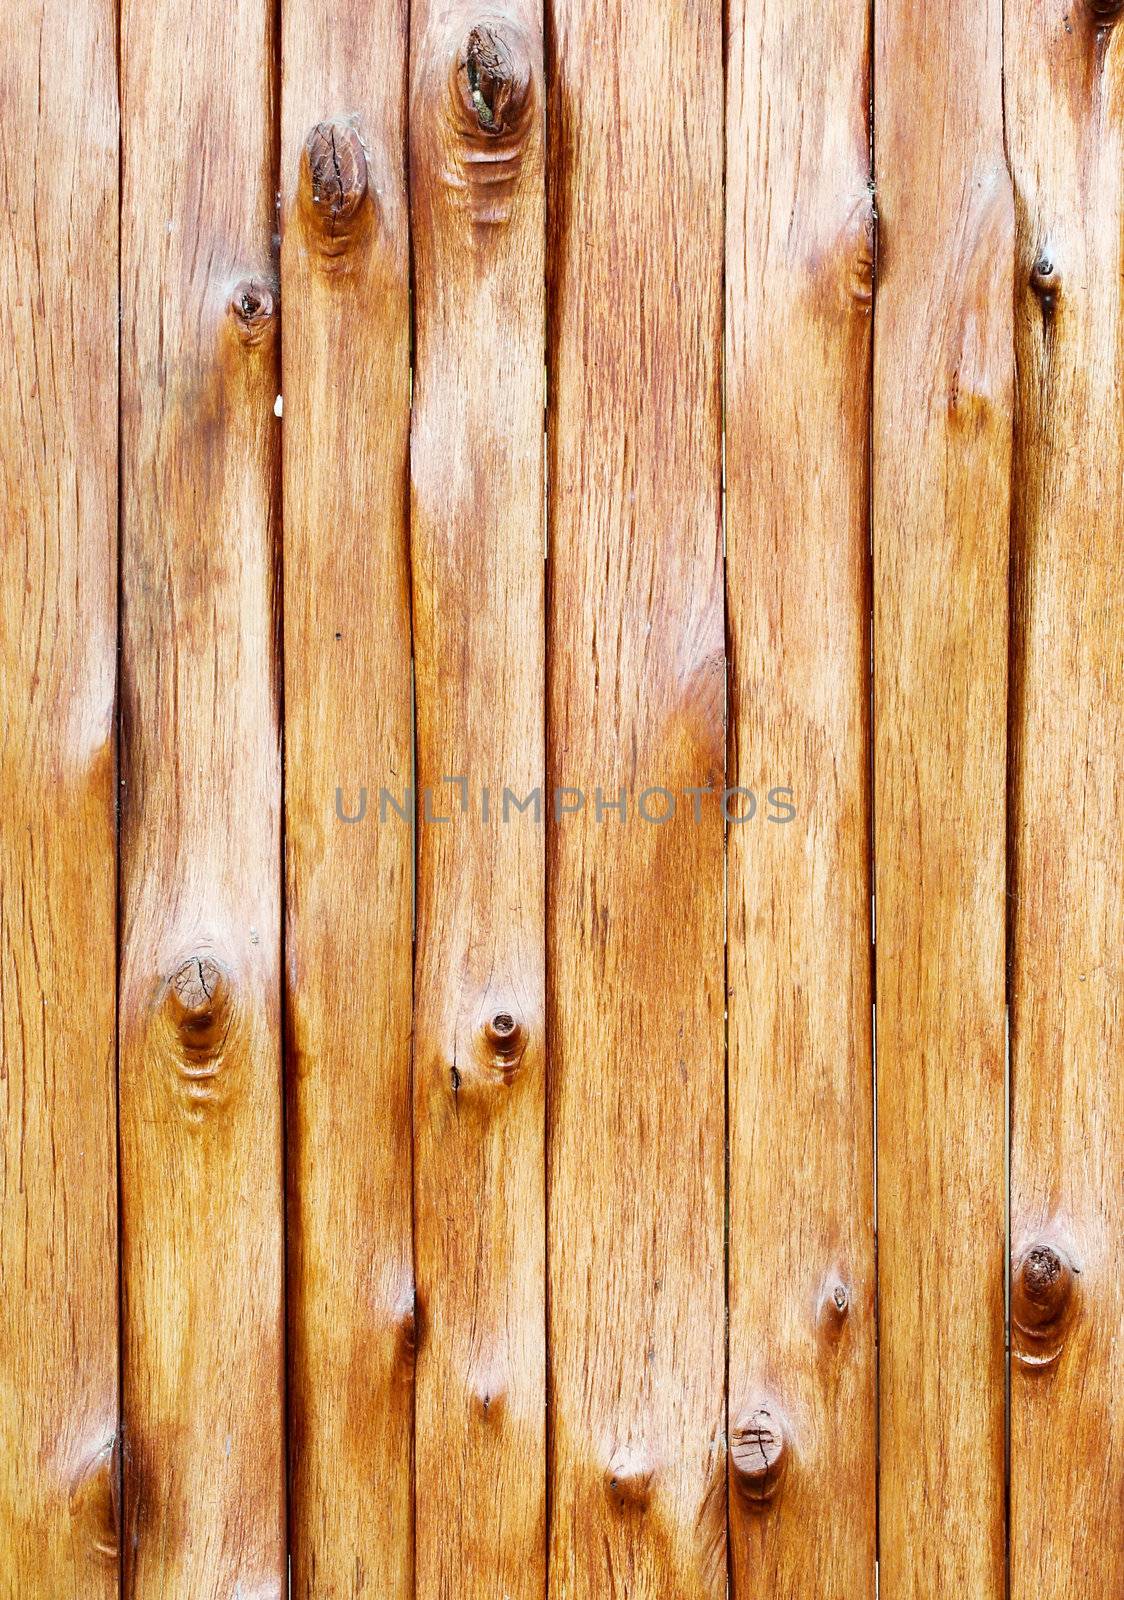 wooden wall texture background by geargodz